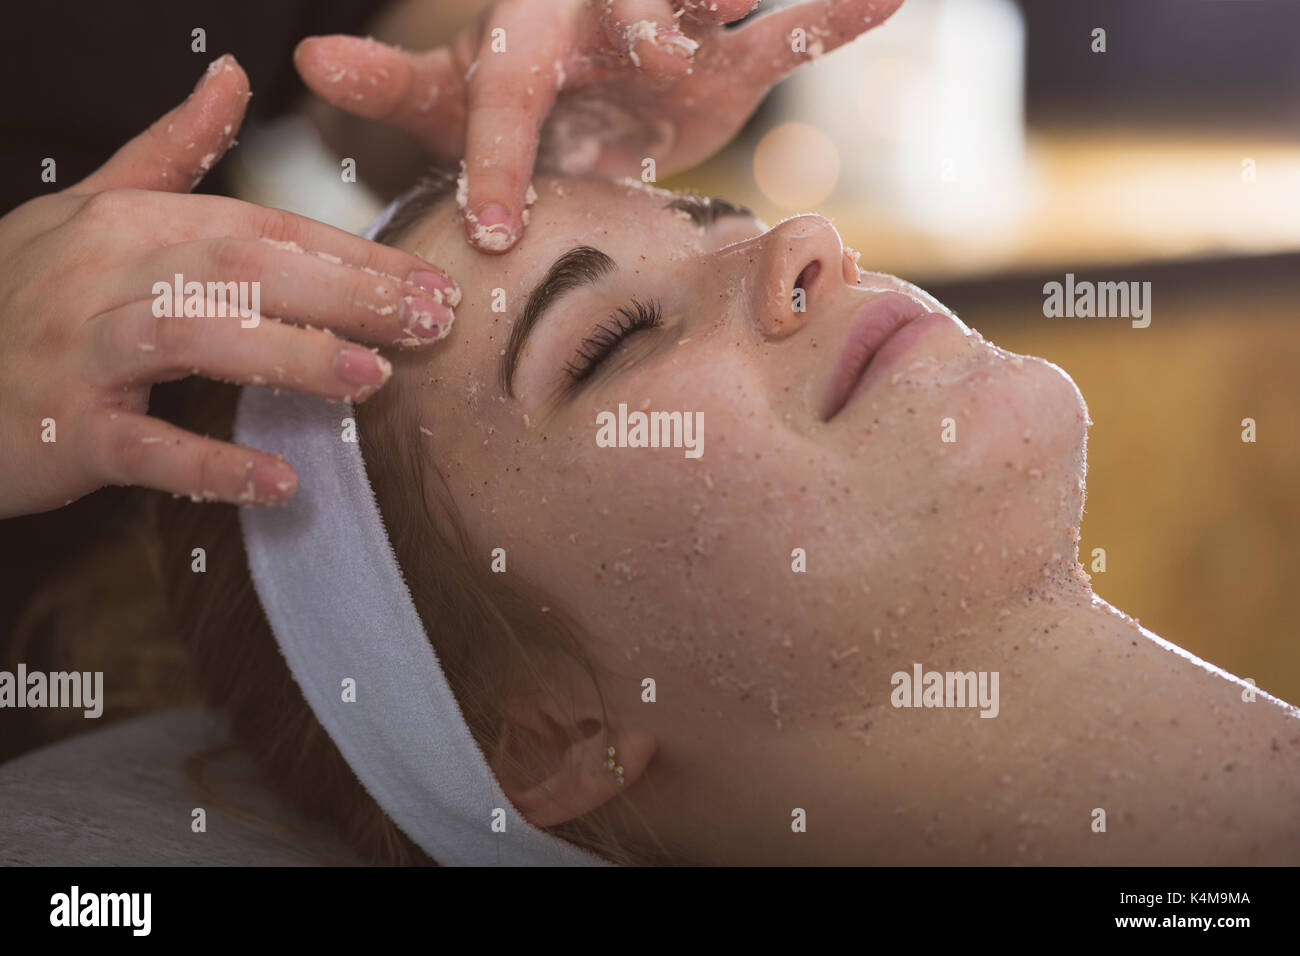 Beautician applying exfoliating salt scrub on woman's face Stock Photo